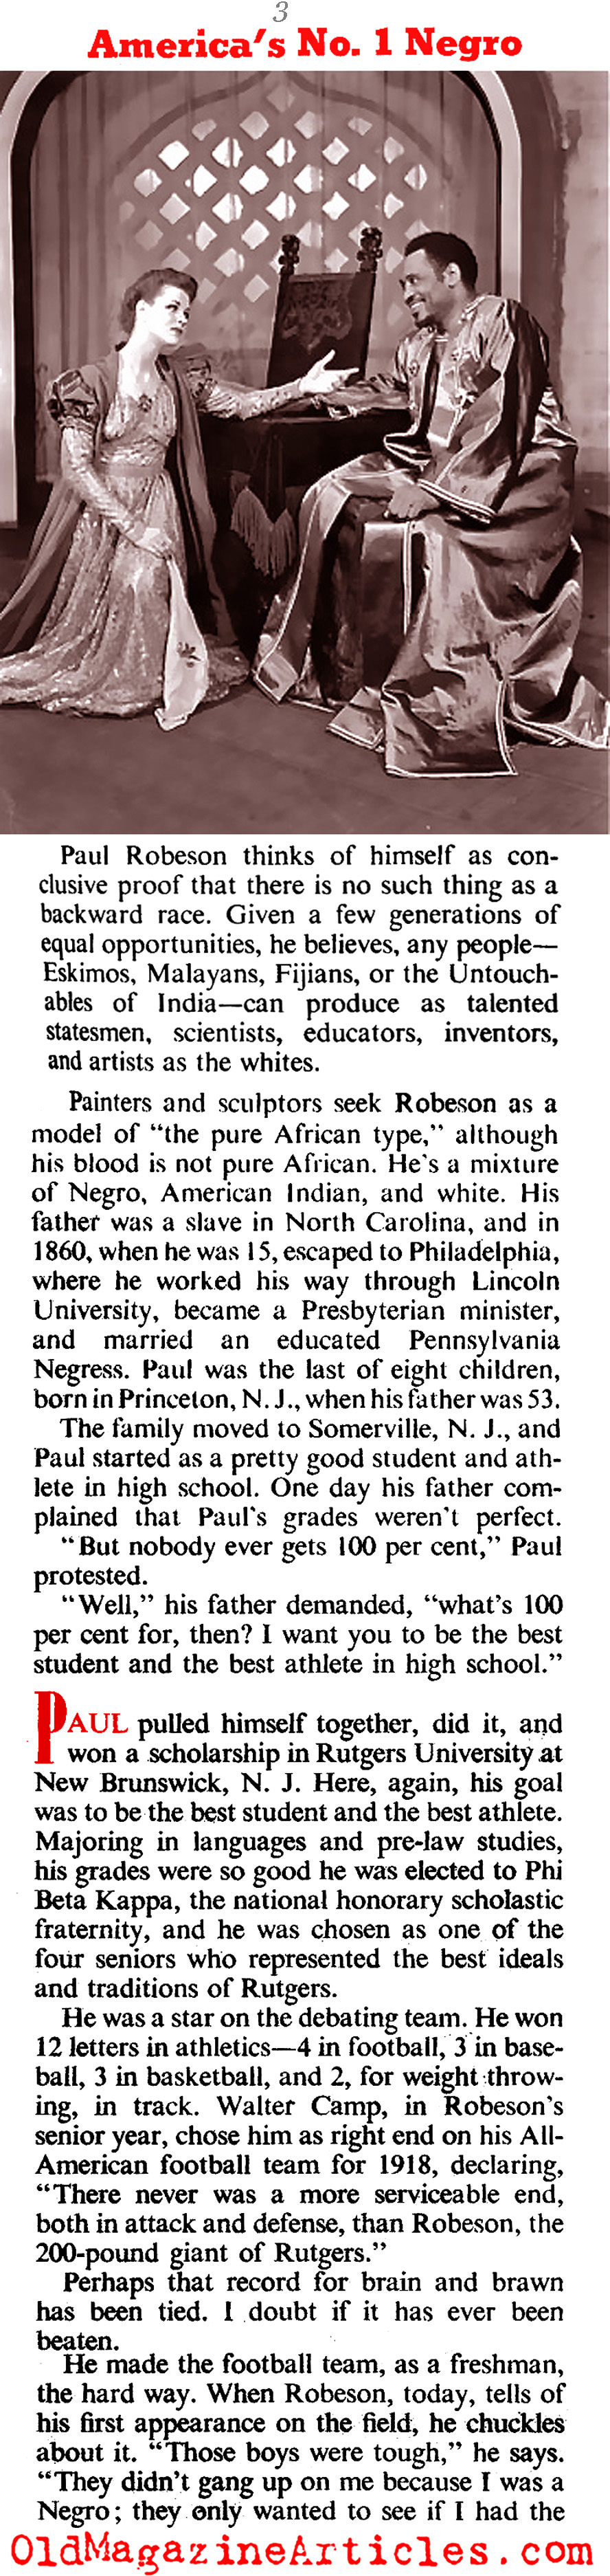 ''America's No. 1 Negro'' (The American Magazine, 1941)